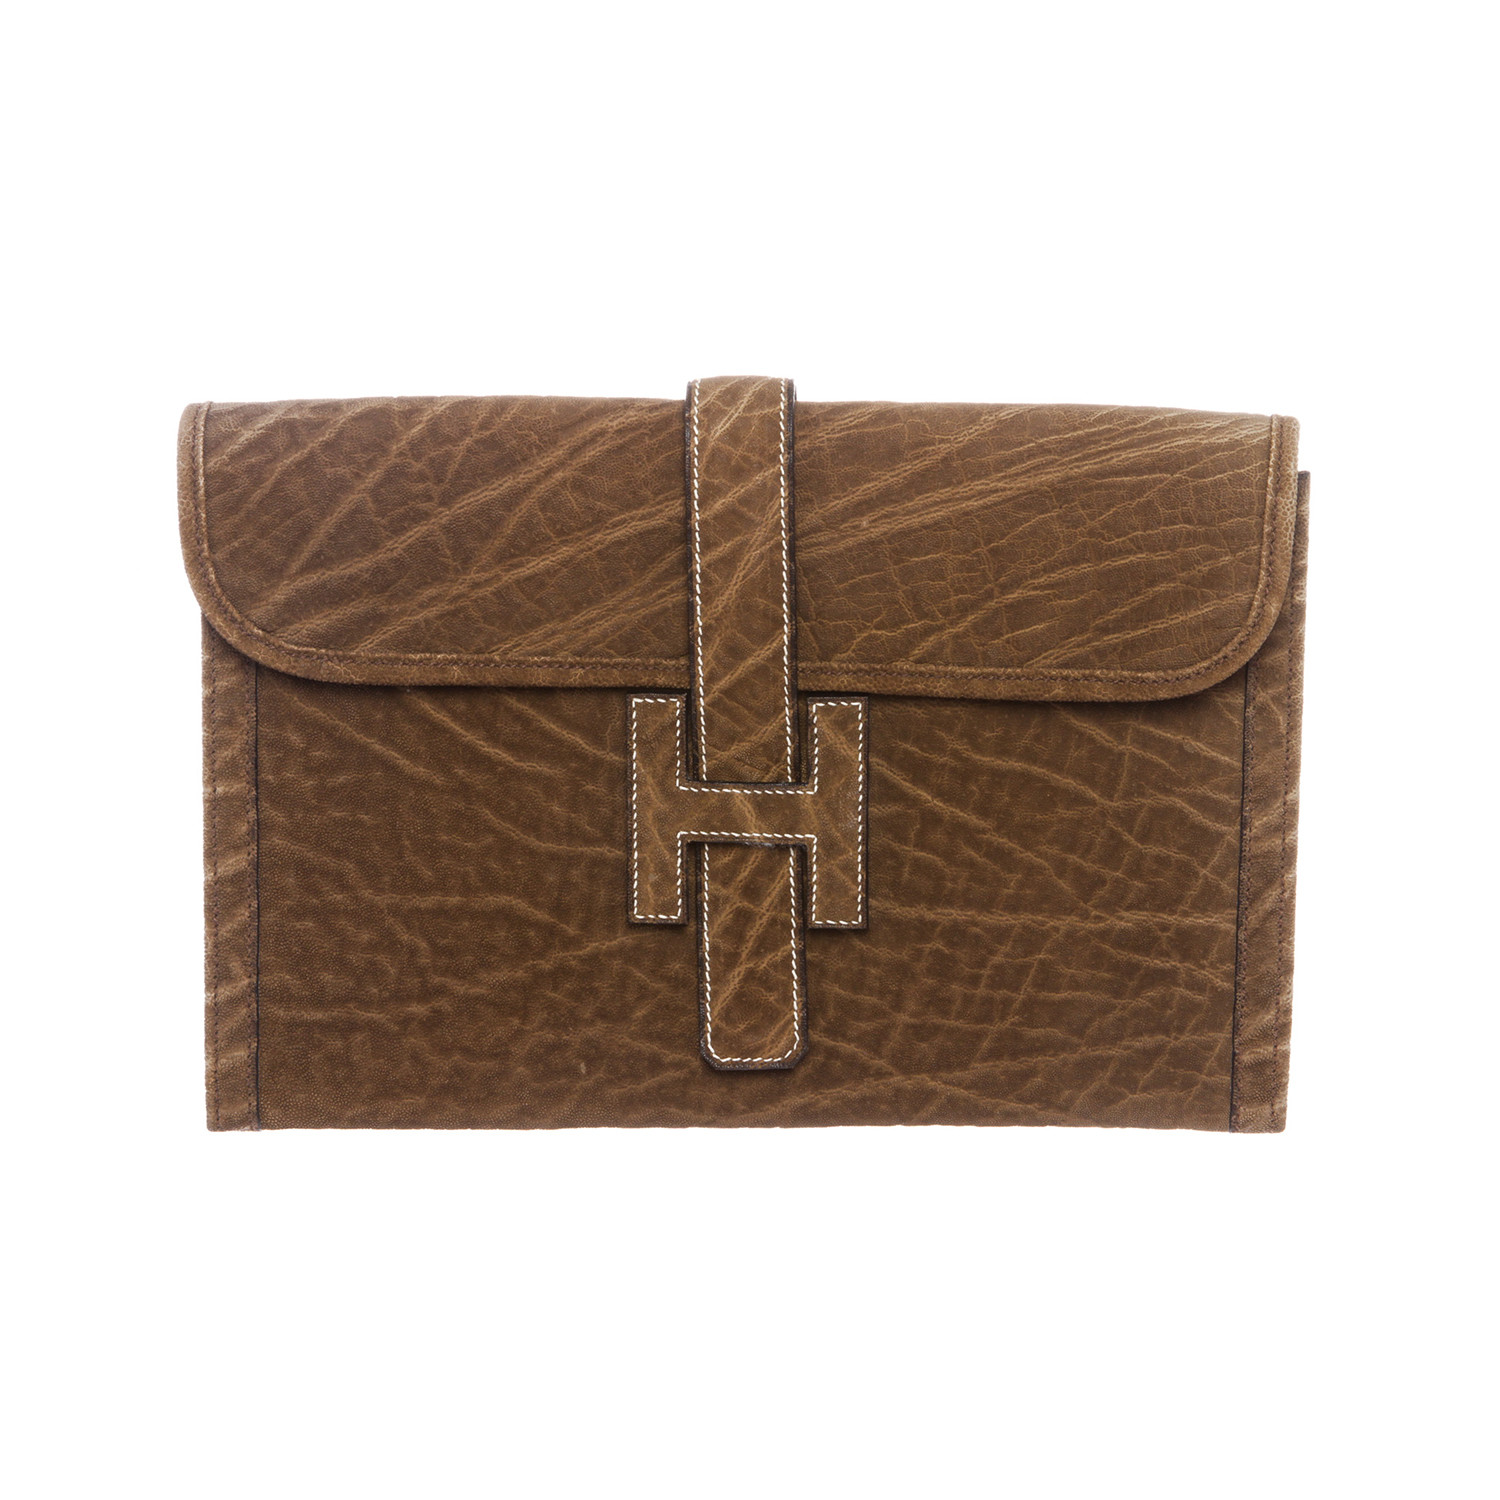 Elephant Skin Jige Clutch Bag // Brown // Preowned - Louis Vuitton